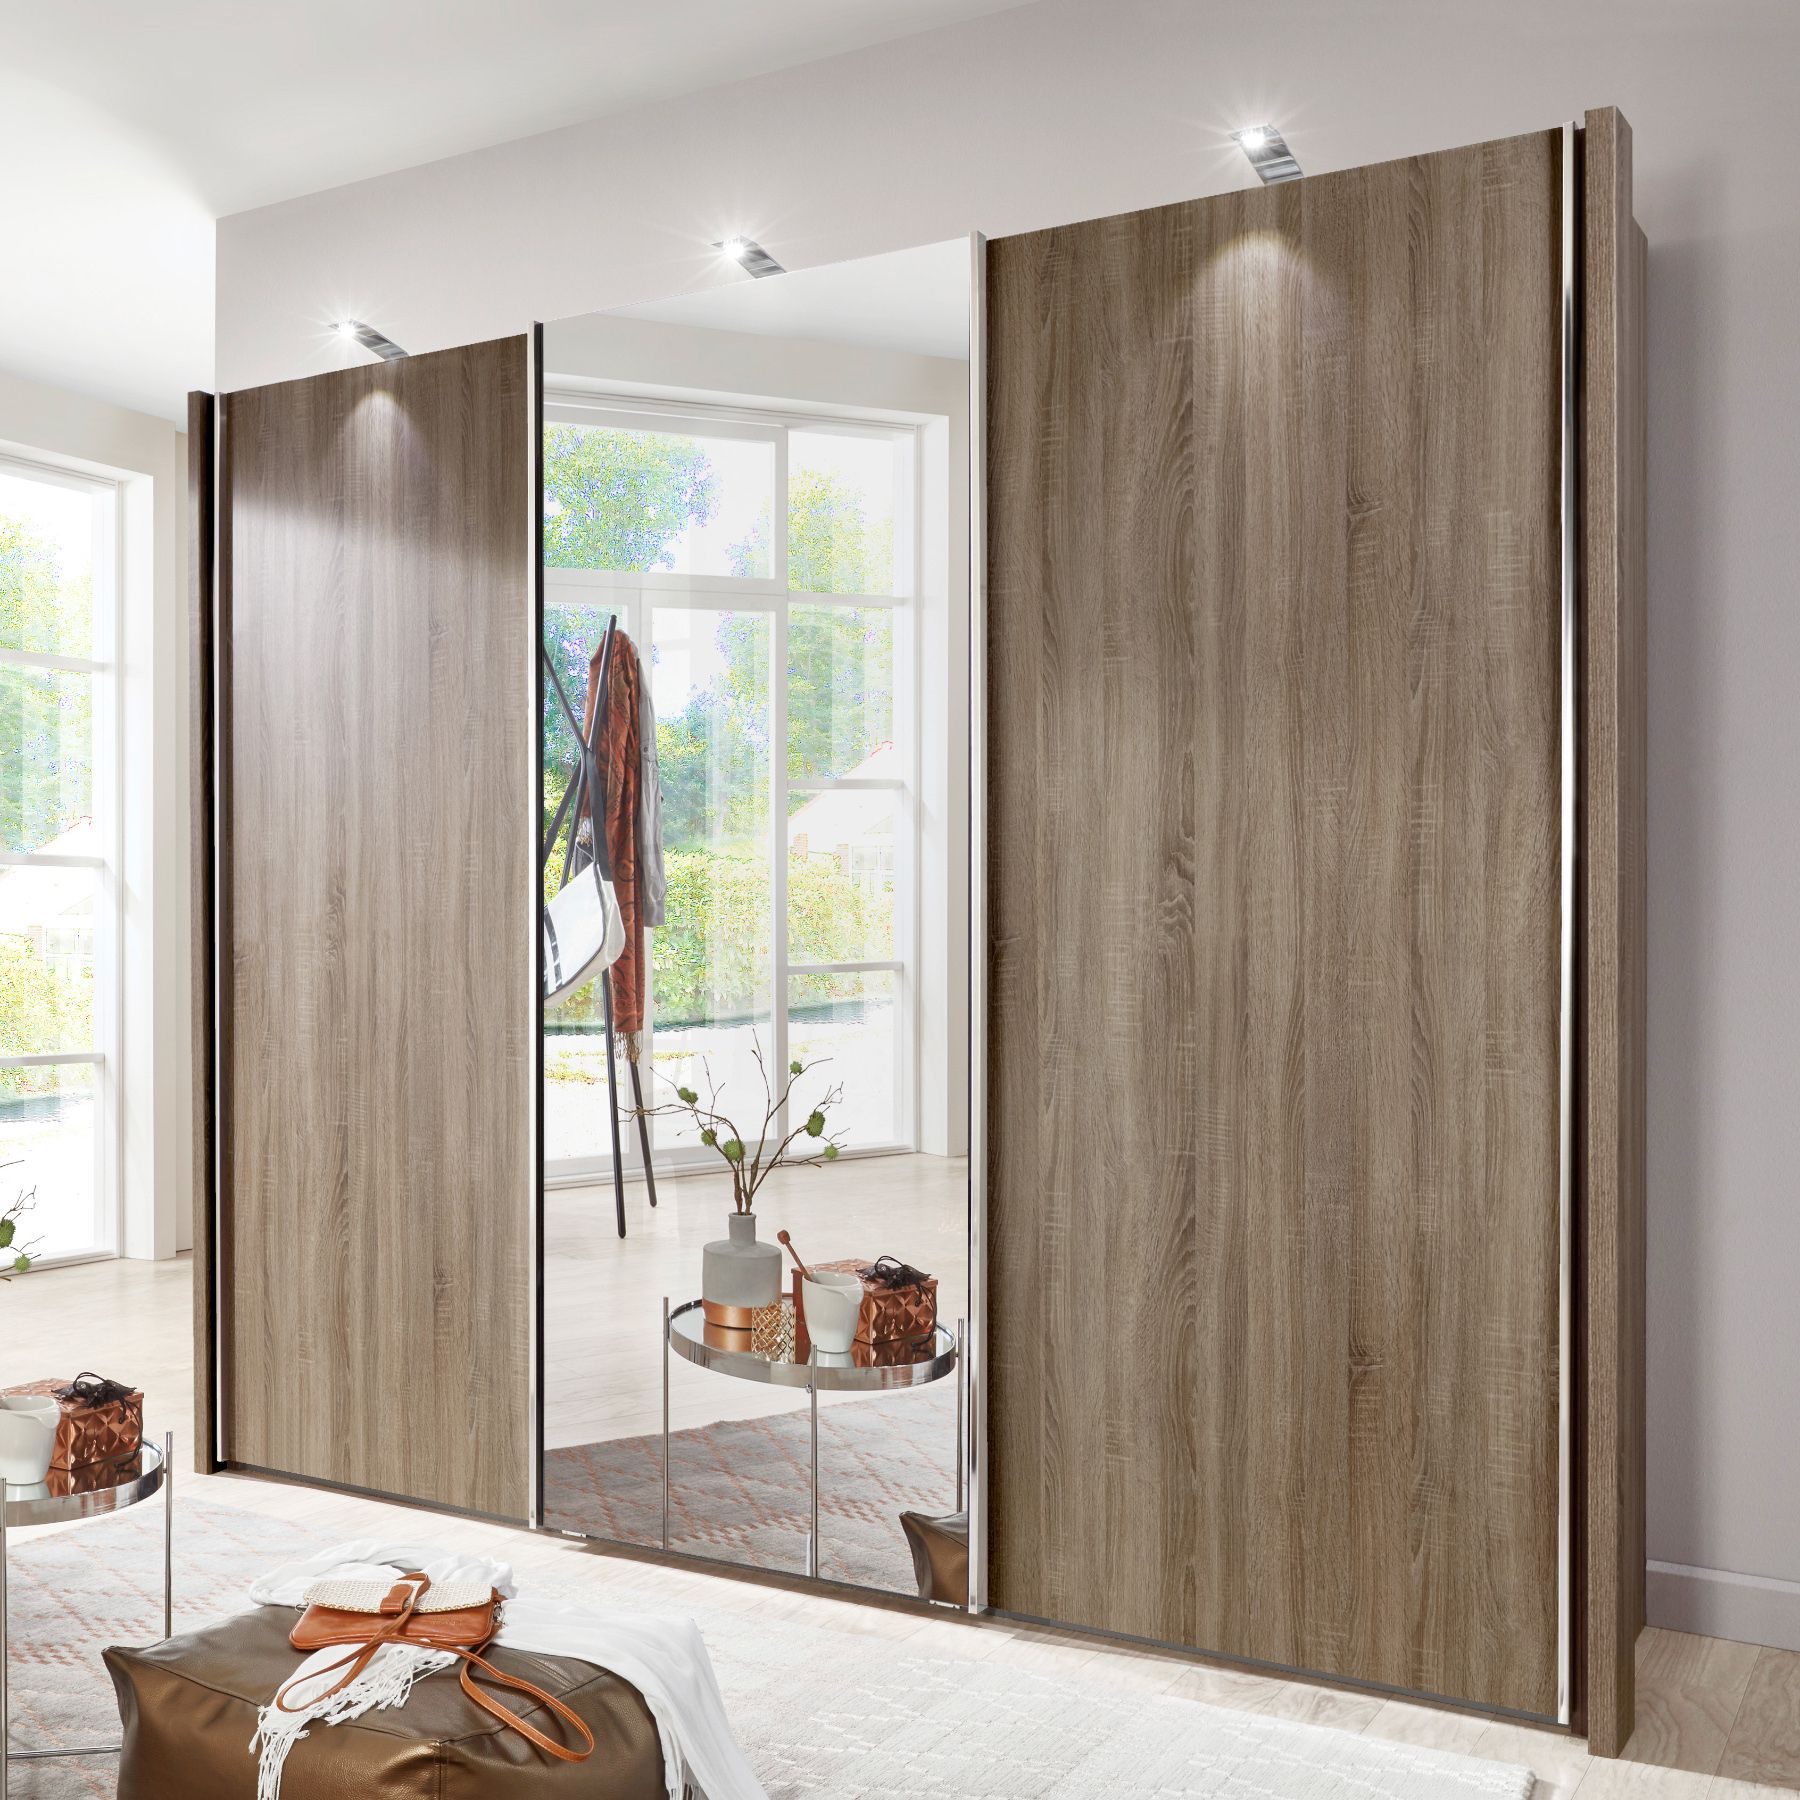 Monroe Plus – 2 Rustic Oak Doors & 1 Mirrored Door – 3 Door Sliding Wardrobe  – Semi Fitted Wardrobes – Progressive Furnishings Intended For Oak Wardrobes For Sale (View 14 of 15)